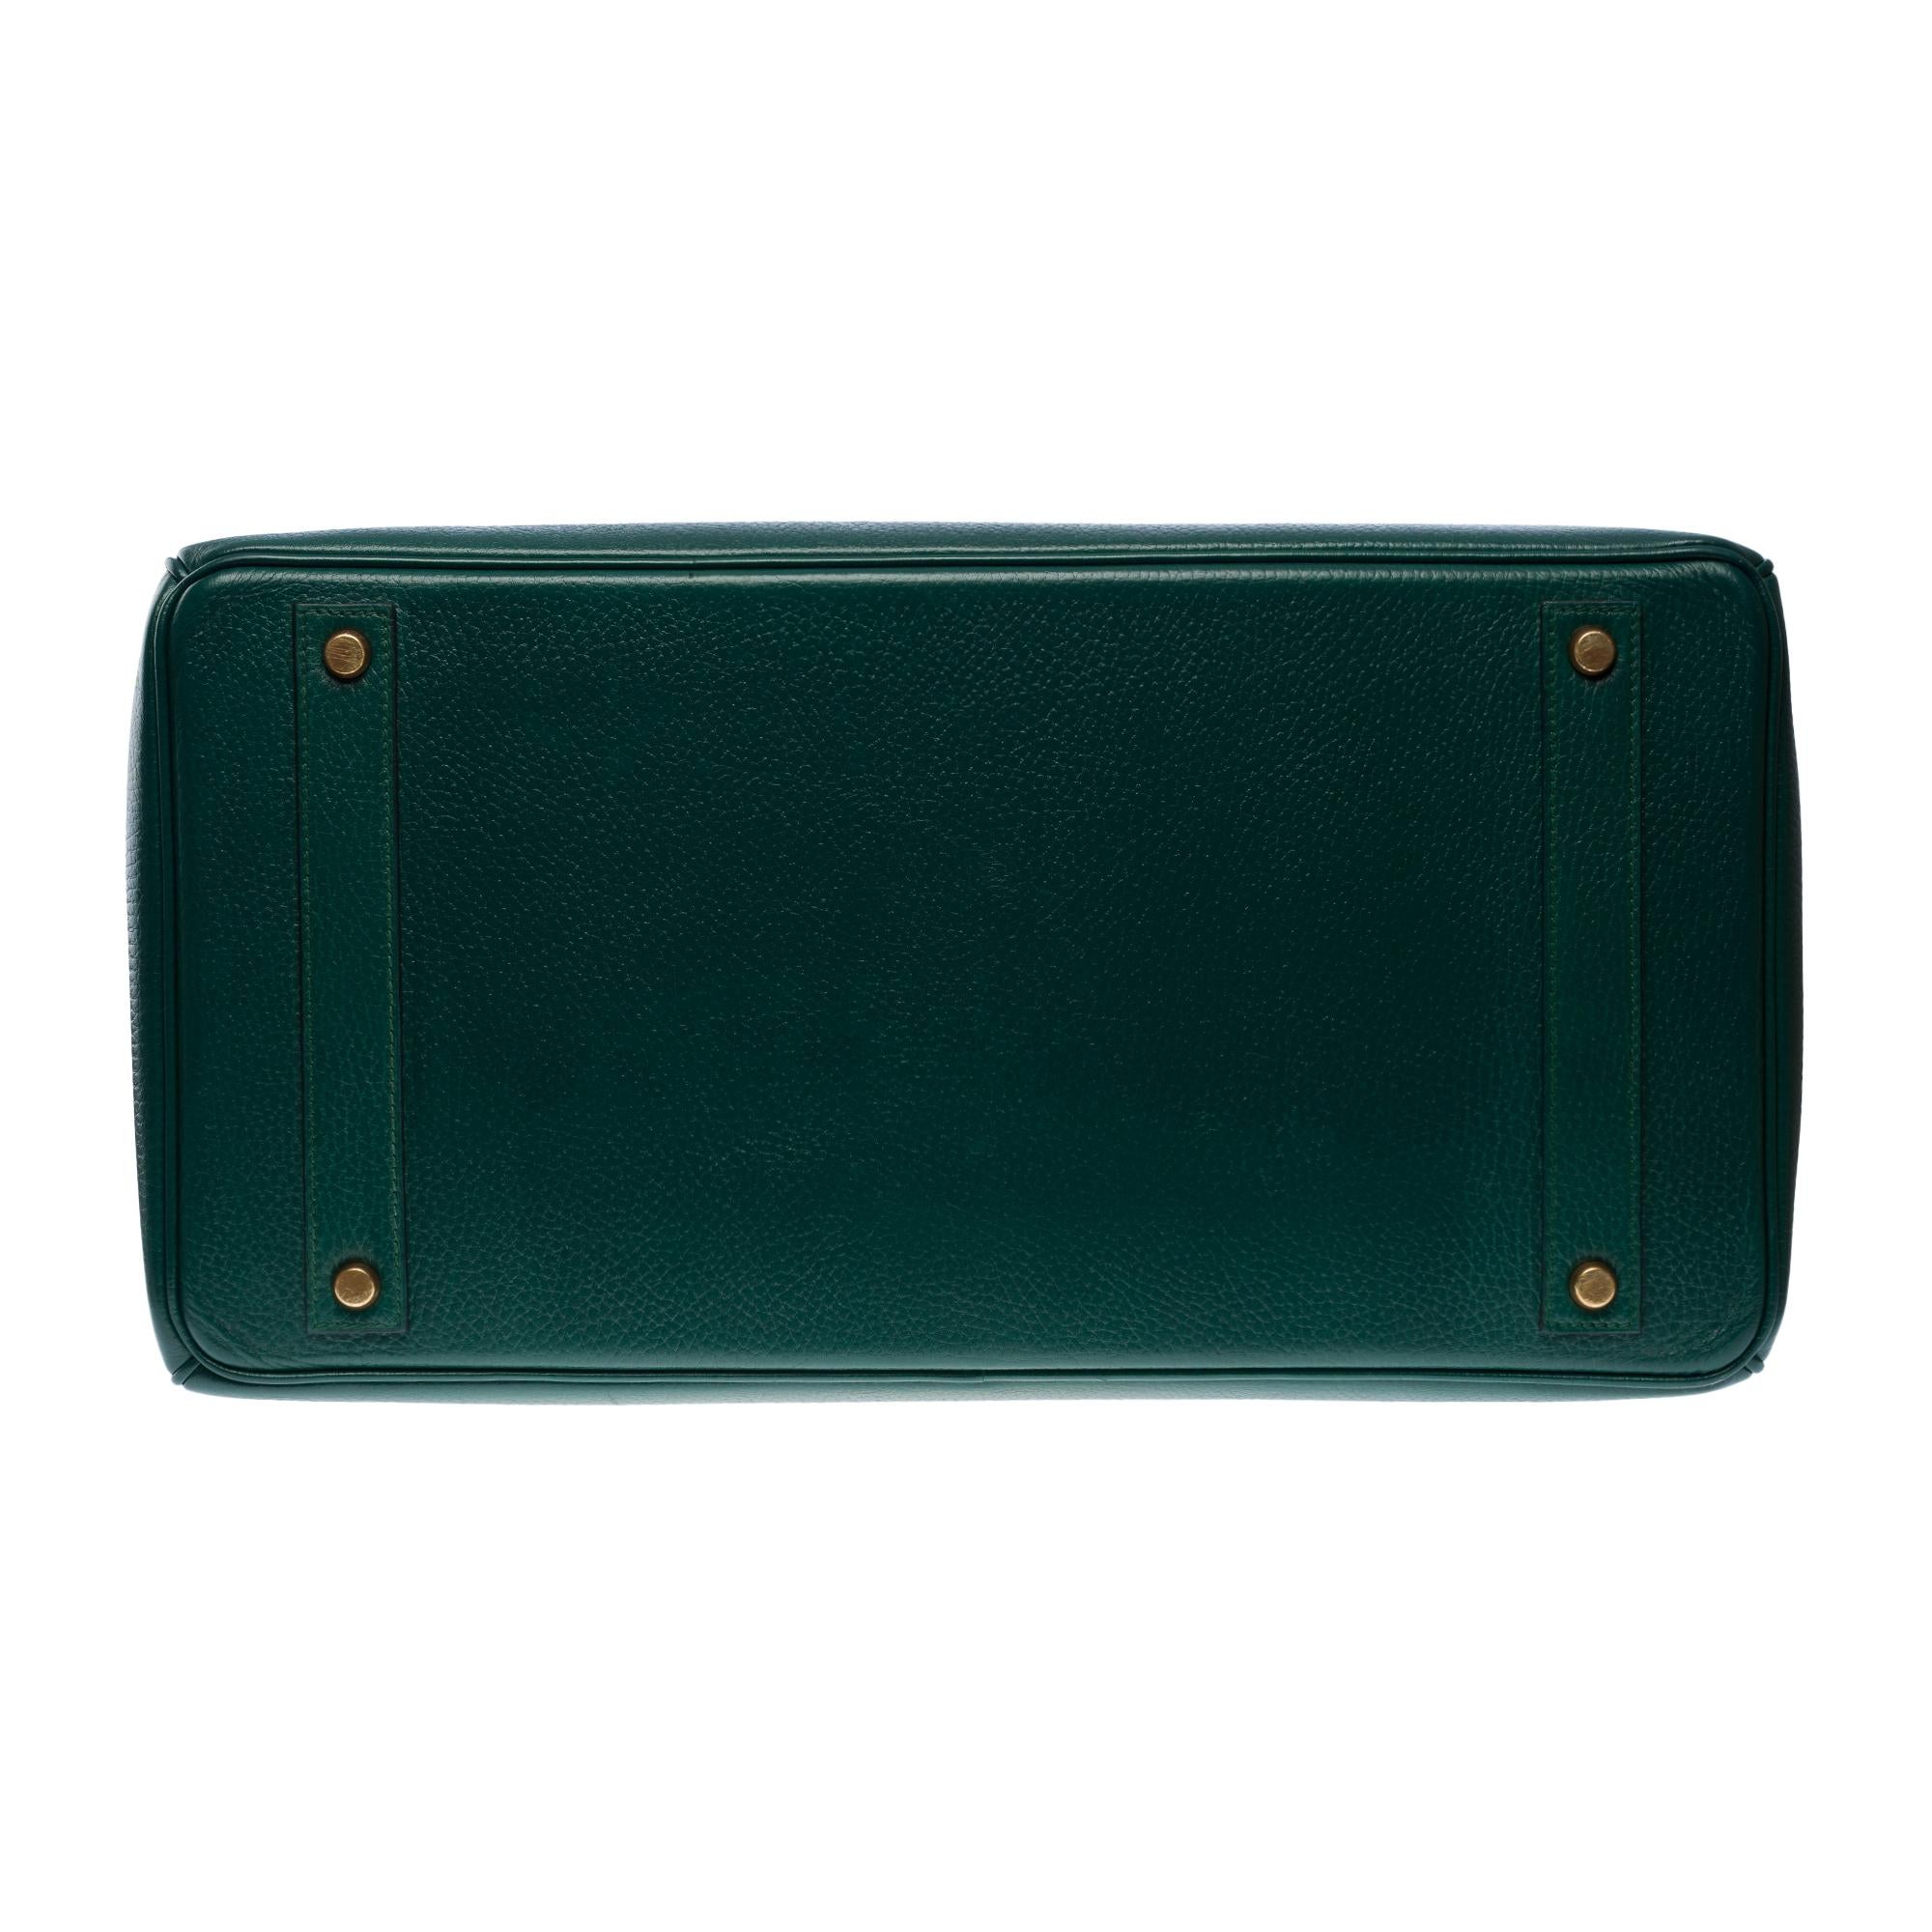 Rare Hermes Birkin 40 handbag in Emerald Green Ardennes Calf leather, GHW 5